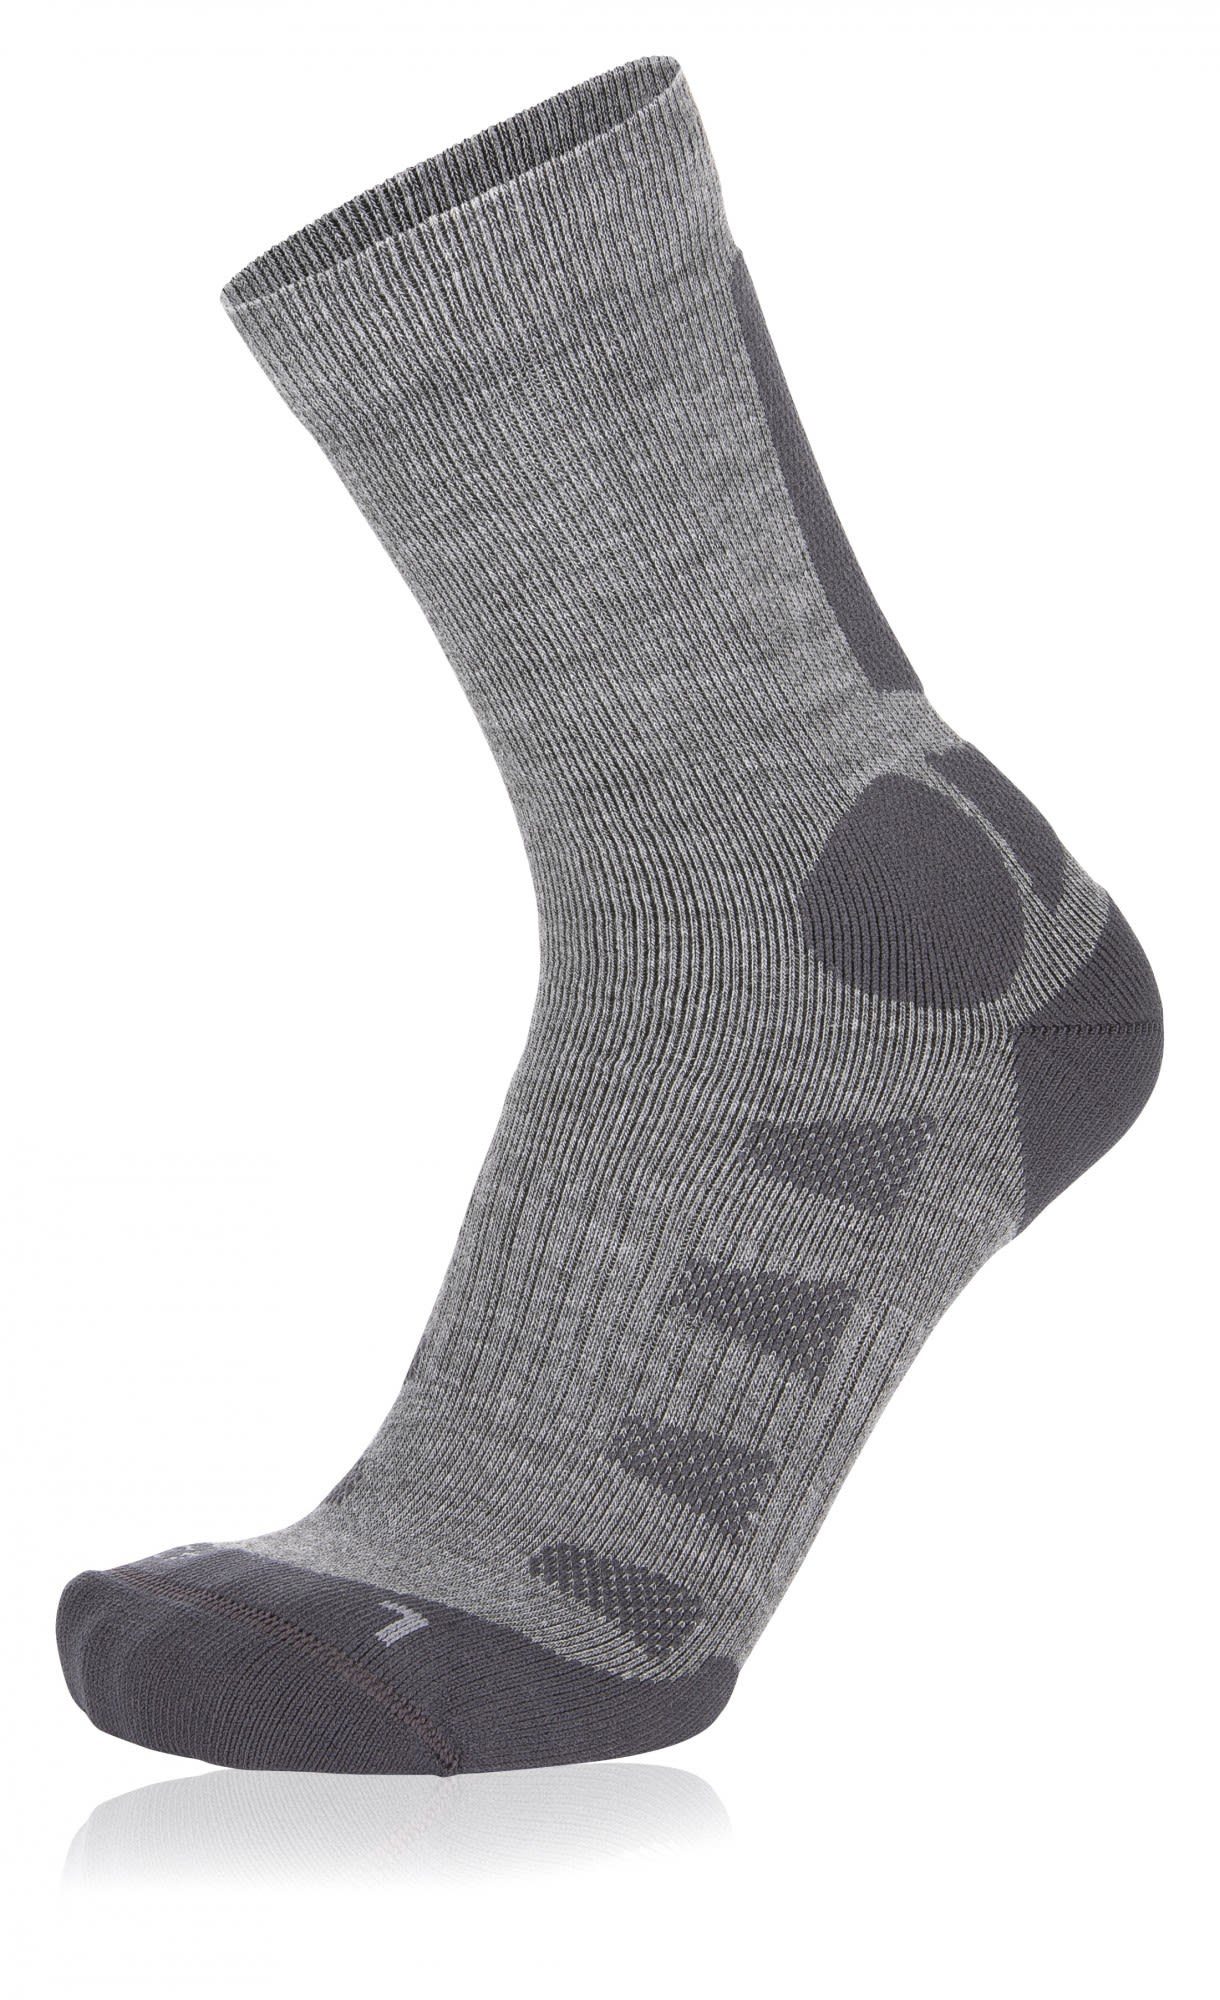 Grey Kompressionssocken - Melange X-Socks Eightsox Light Anthracite Tech Tk Thermosocken